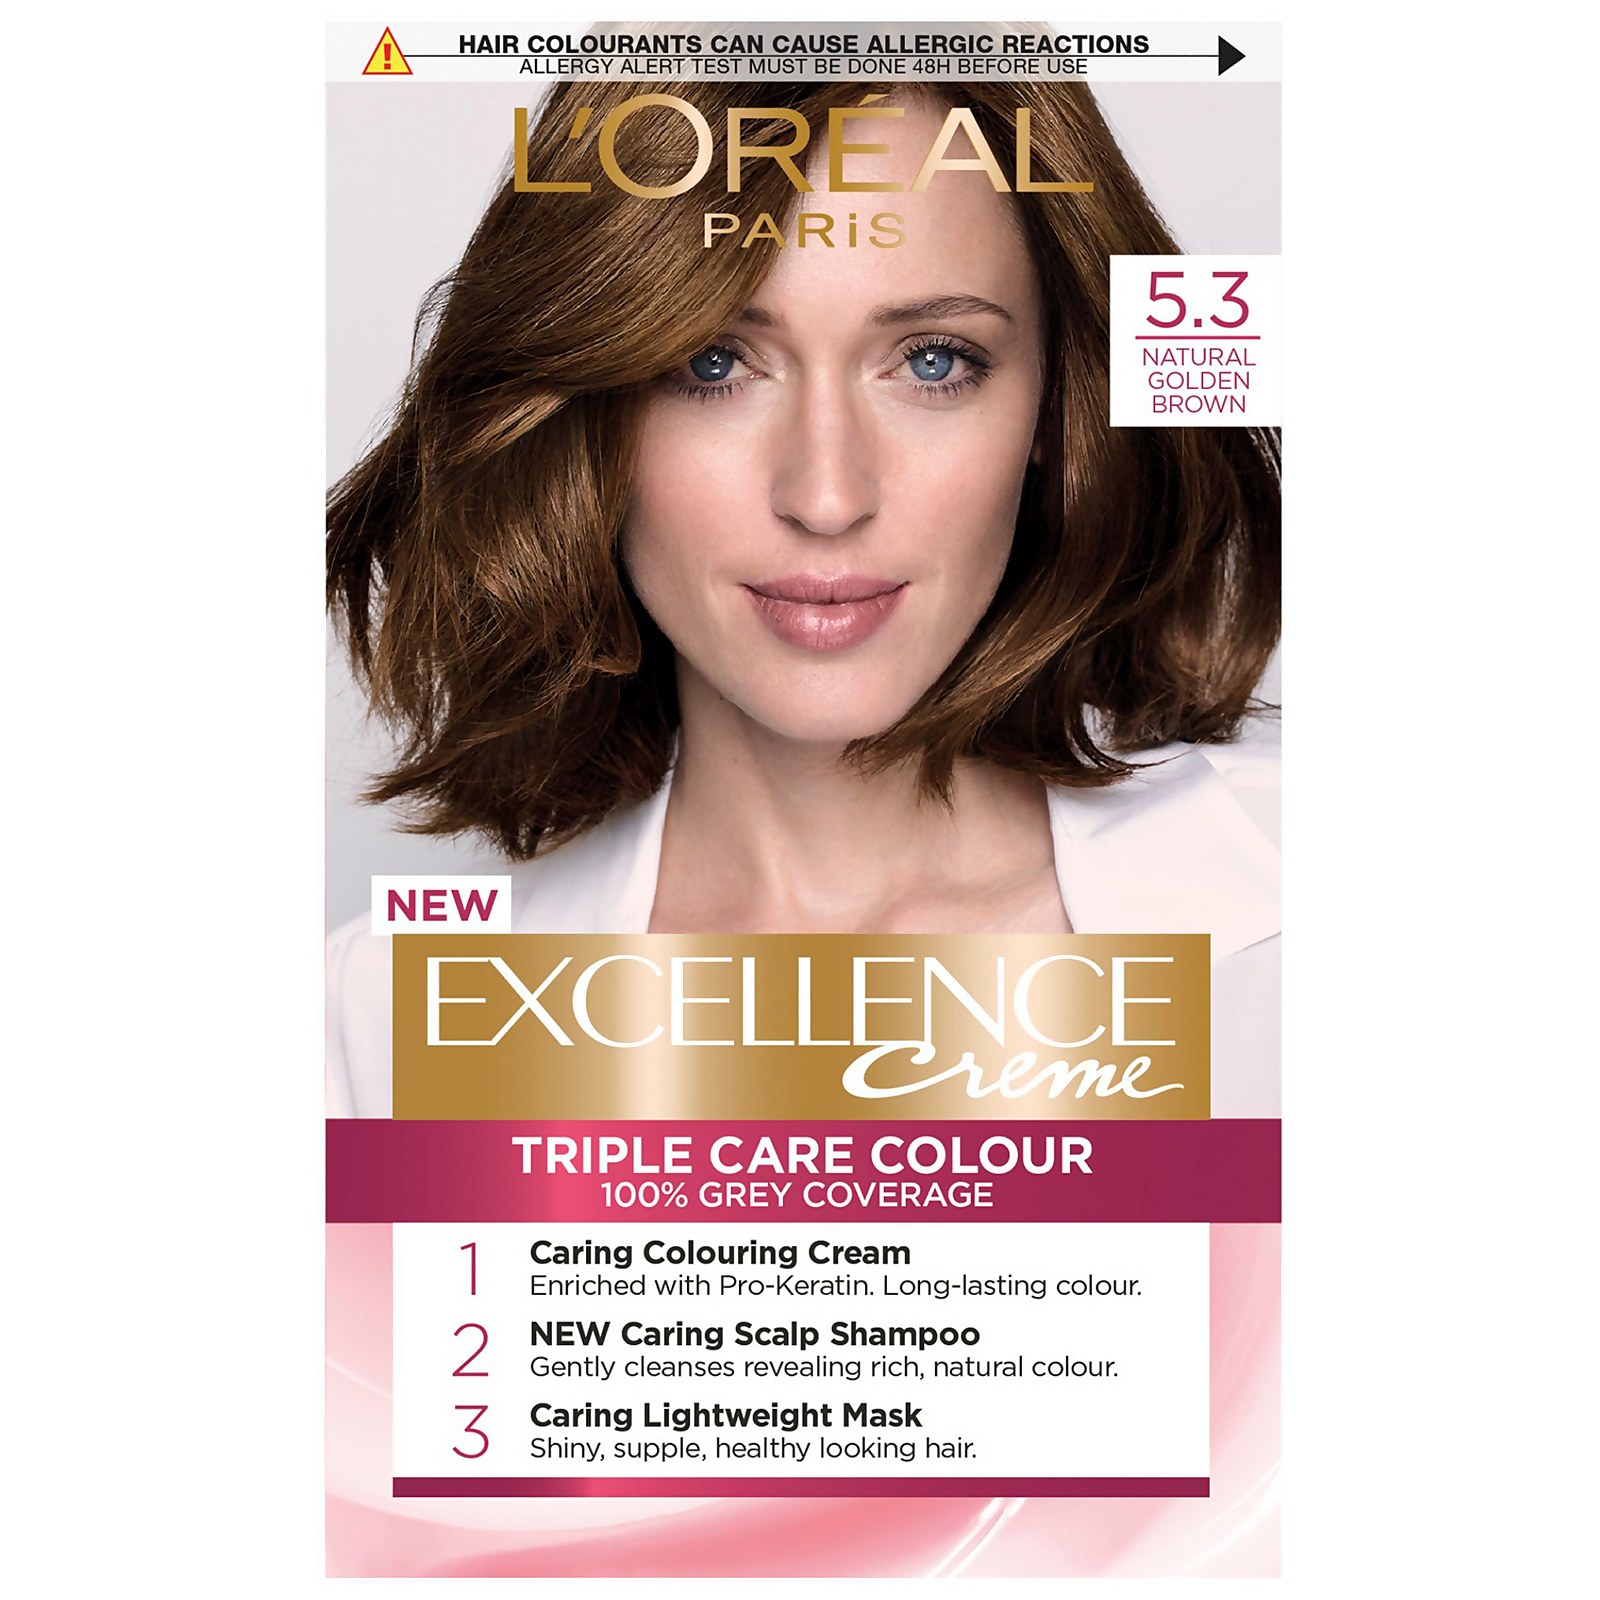 L'Oreal Paris Excellence Creme Permanent Hair Dye (Various Shades) - 5.3 Natural Golden Brown